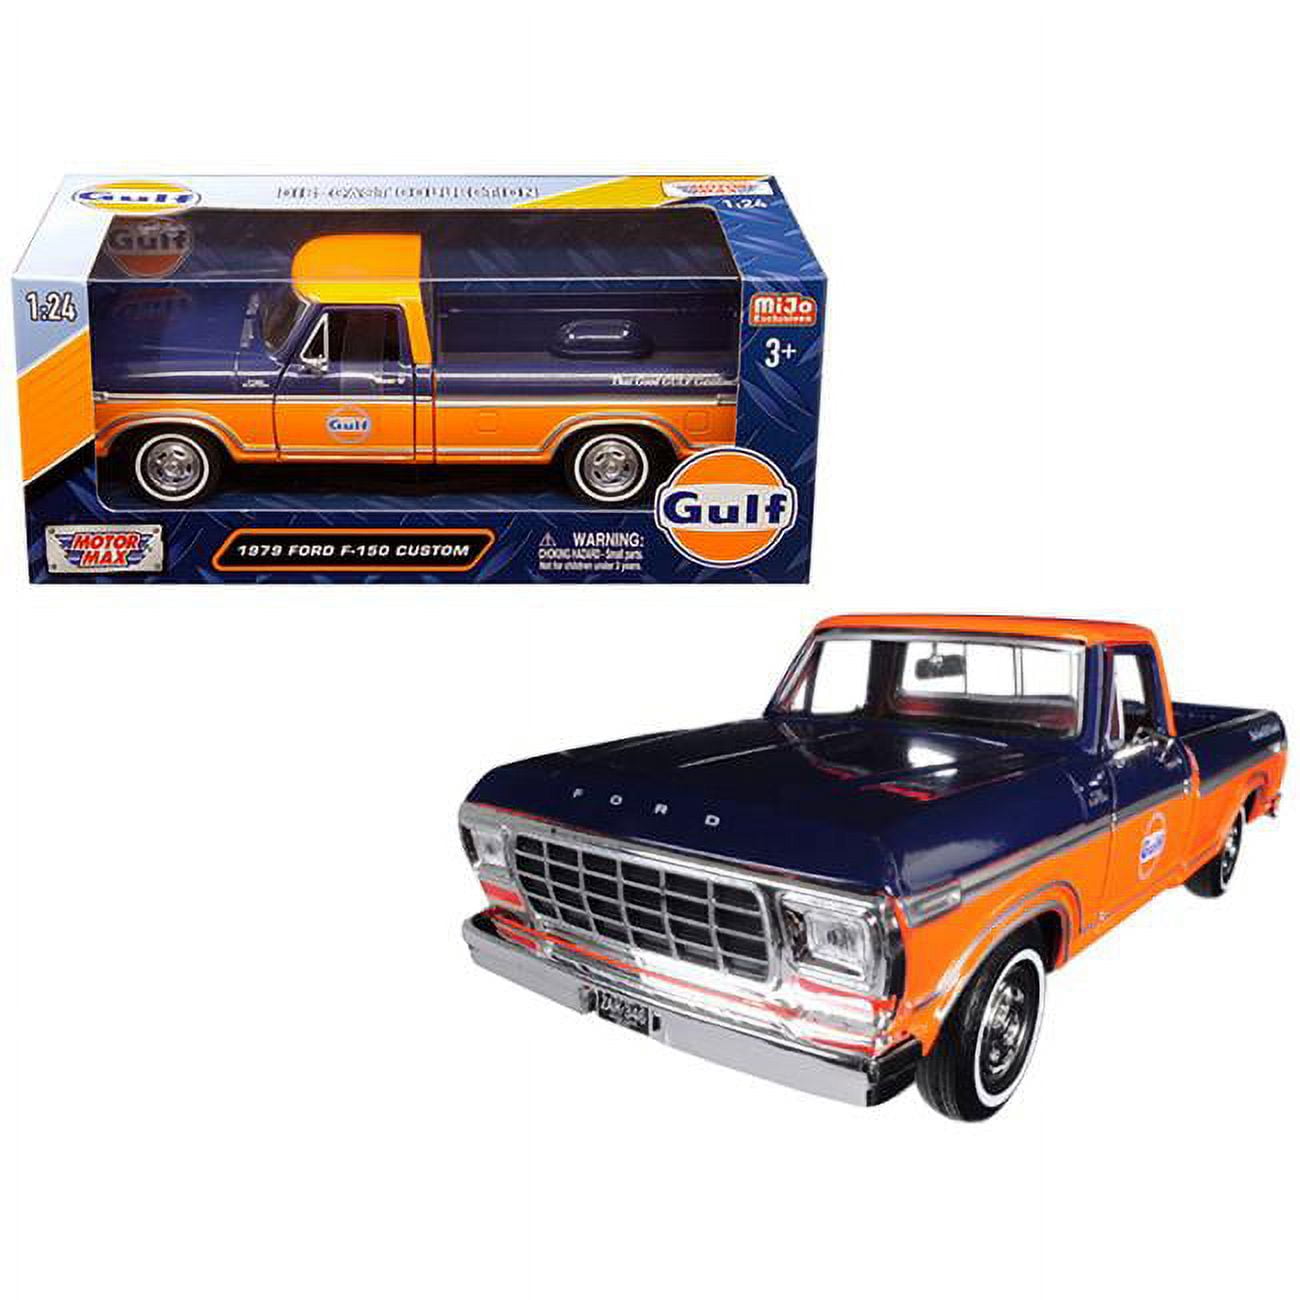 1979 Ford F-150 Custom Pickup Truck Gulf 1-24 Diecast Model Car, Dark Blue & Orange -  MOTORMAX, MO95456